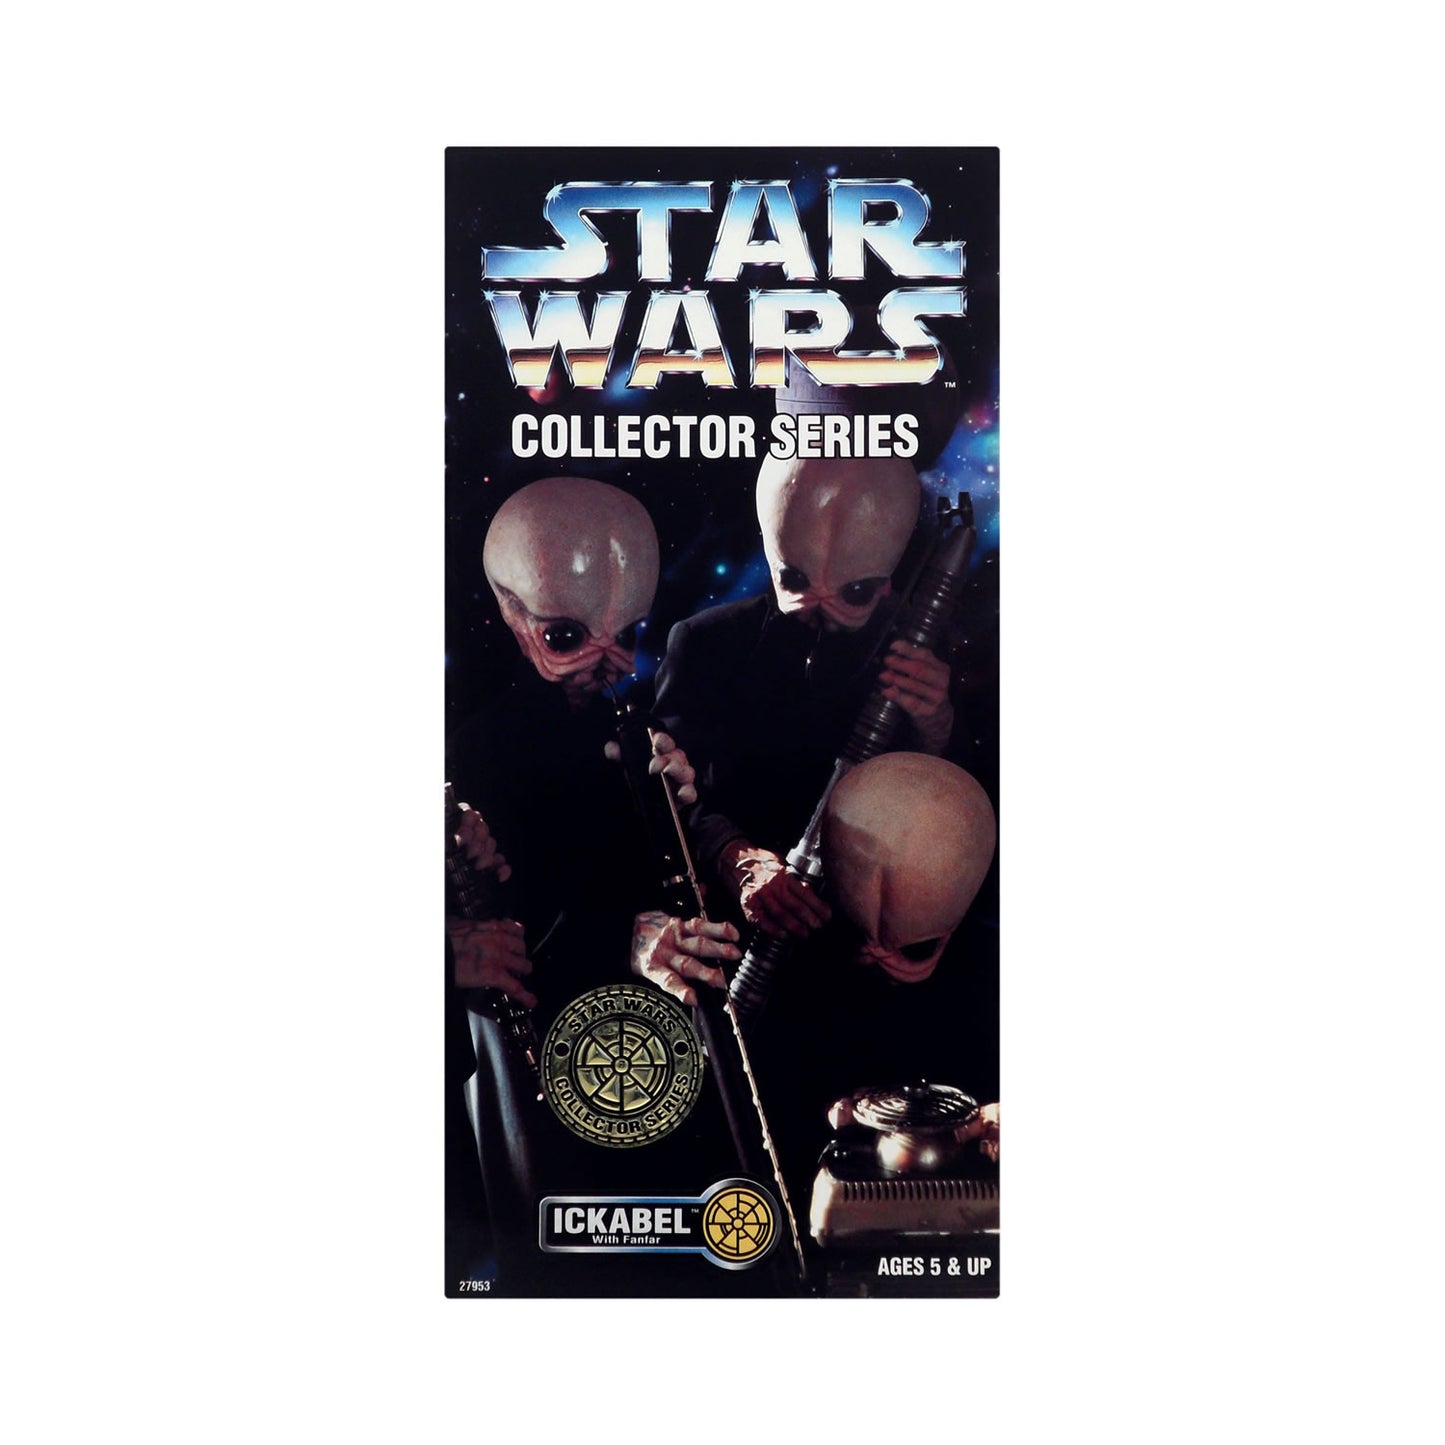 Star Wars Collector Series Cantina Band Member Ickabel